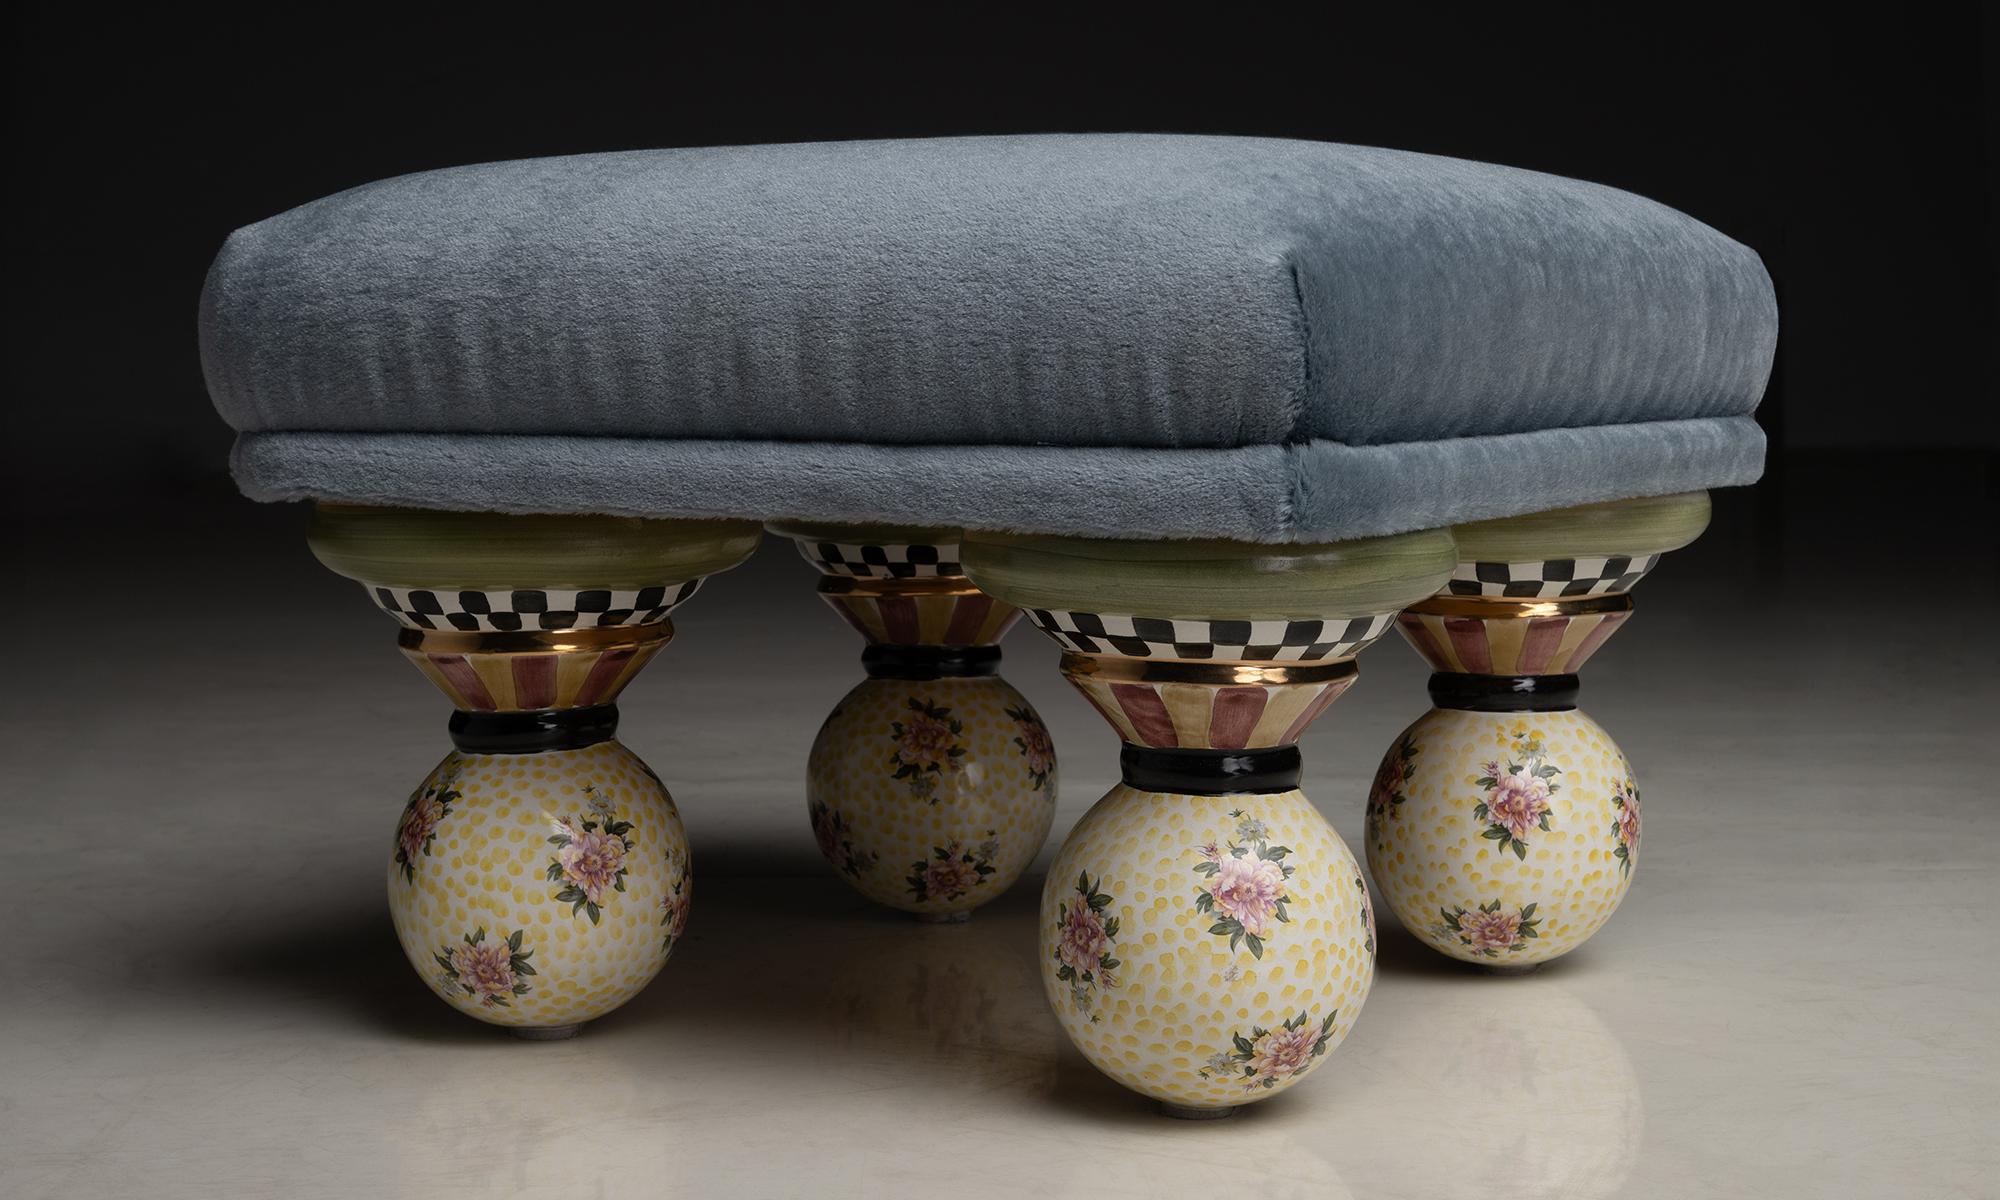 Contemporary Mohair Ottoman, Made in New York